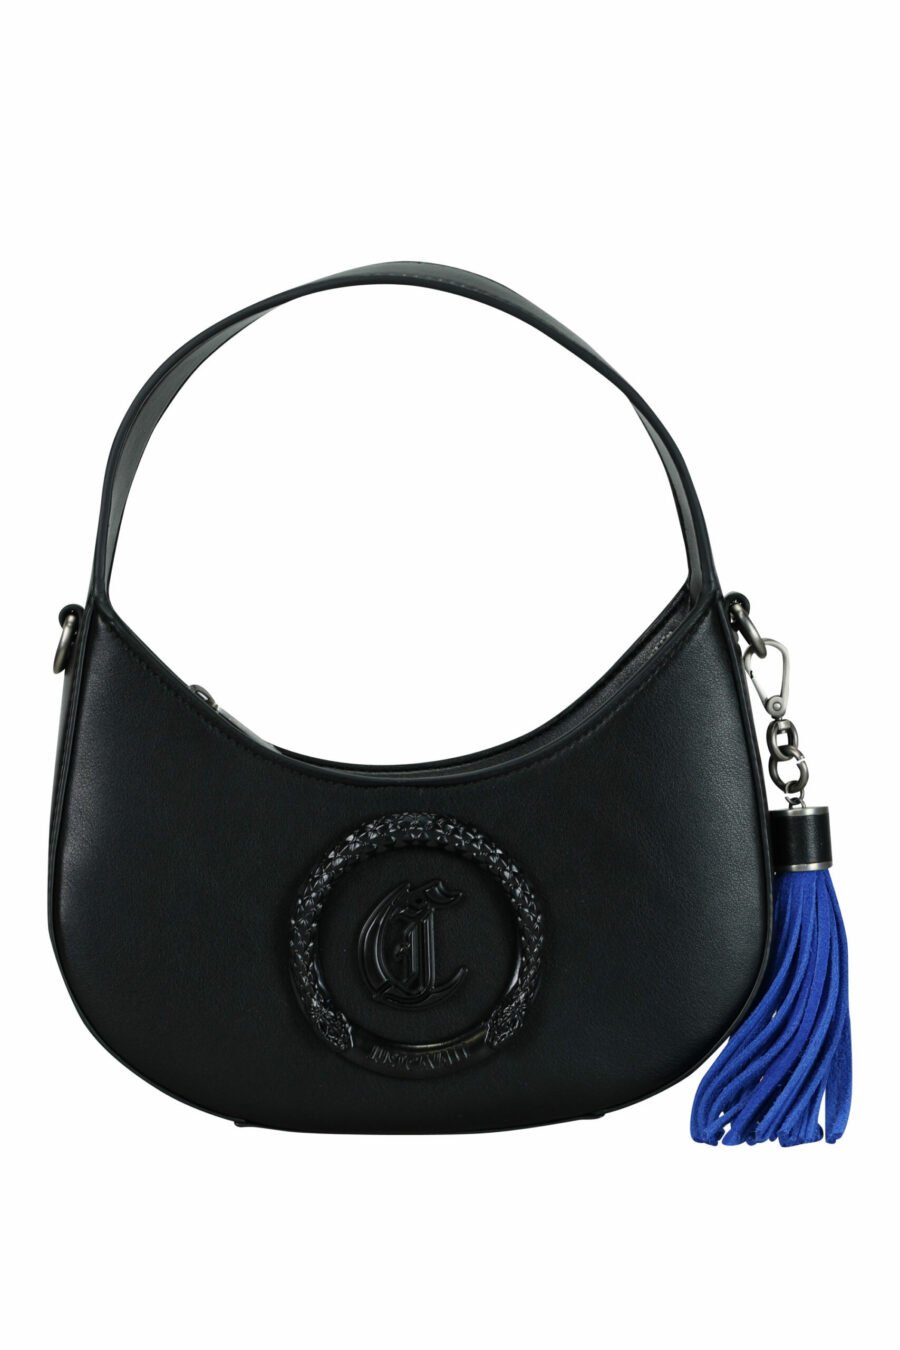 Black shoulder bag with monochrome circular "c" logo - 8052672642738 scaled